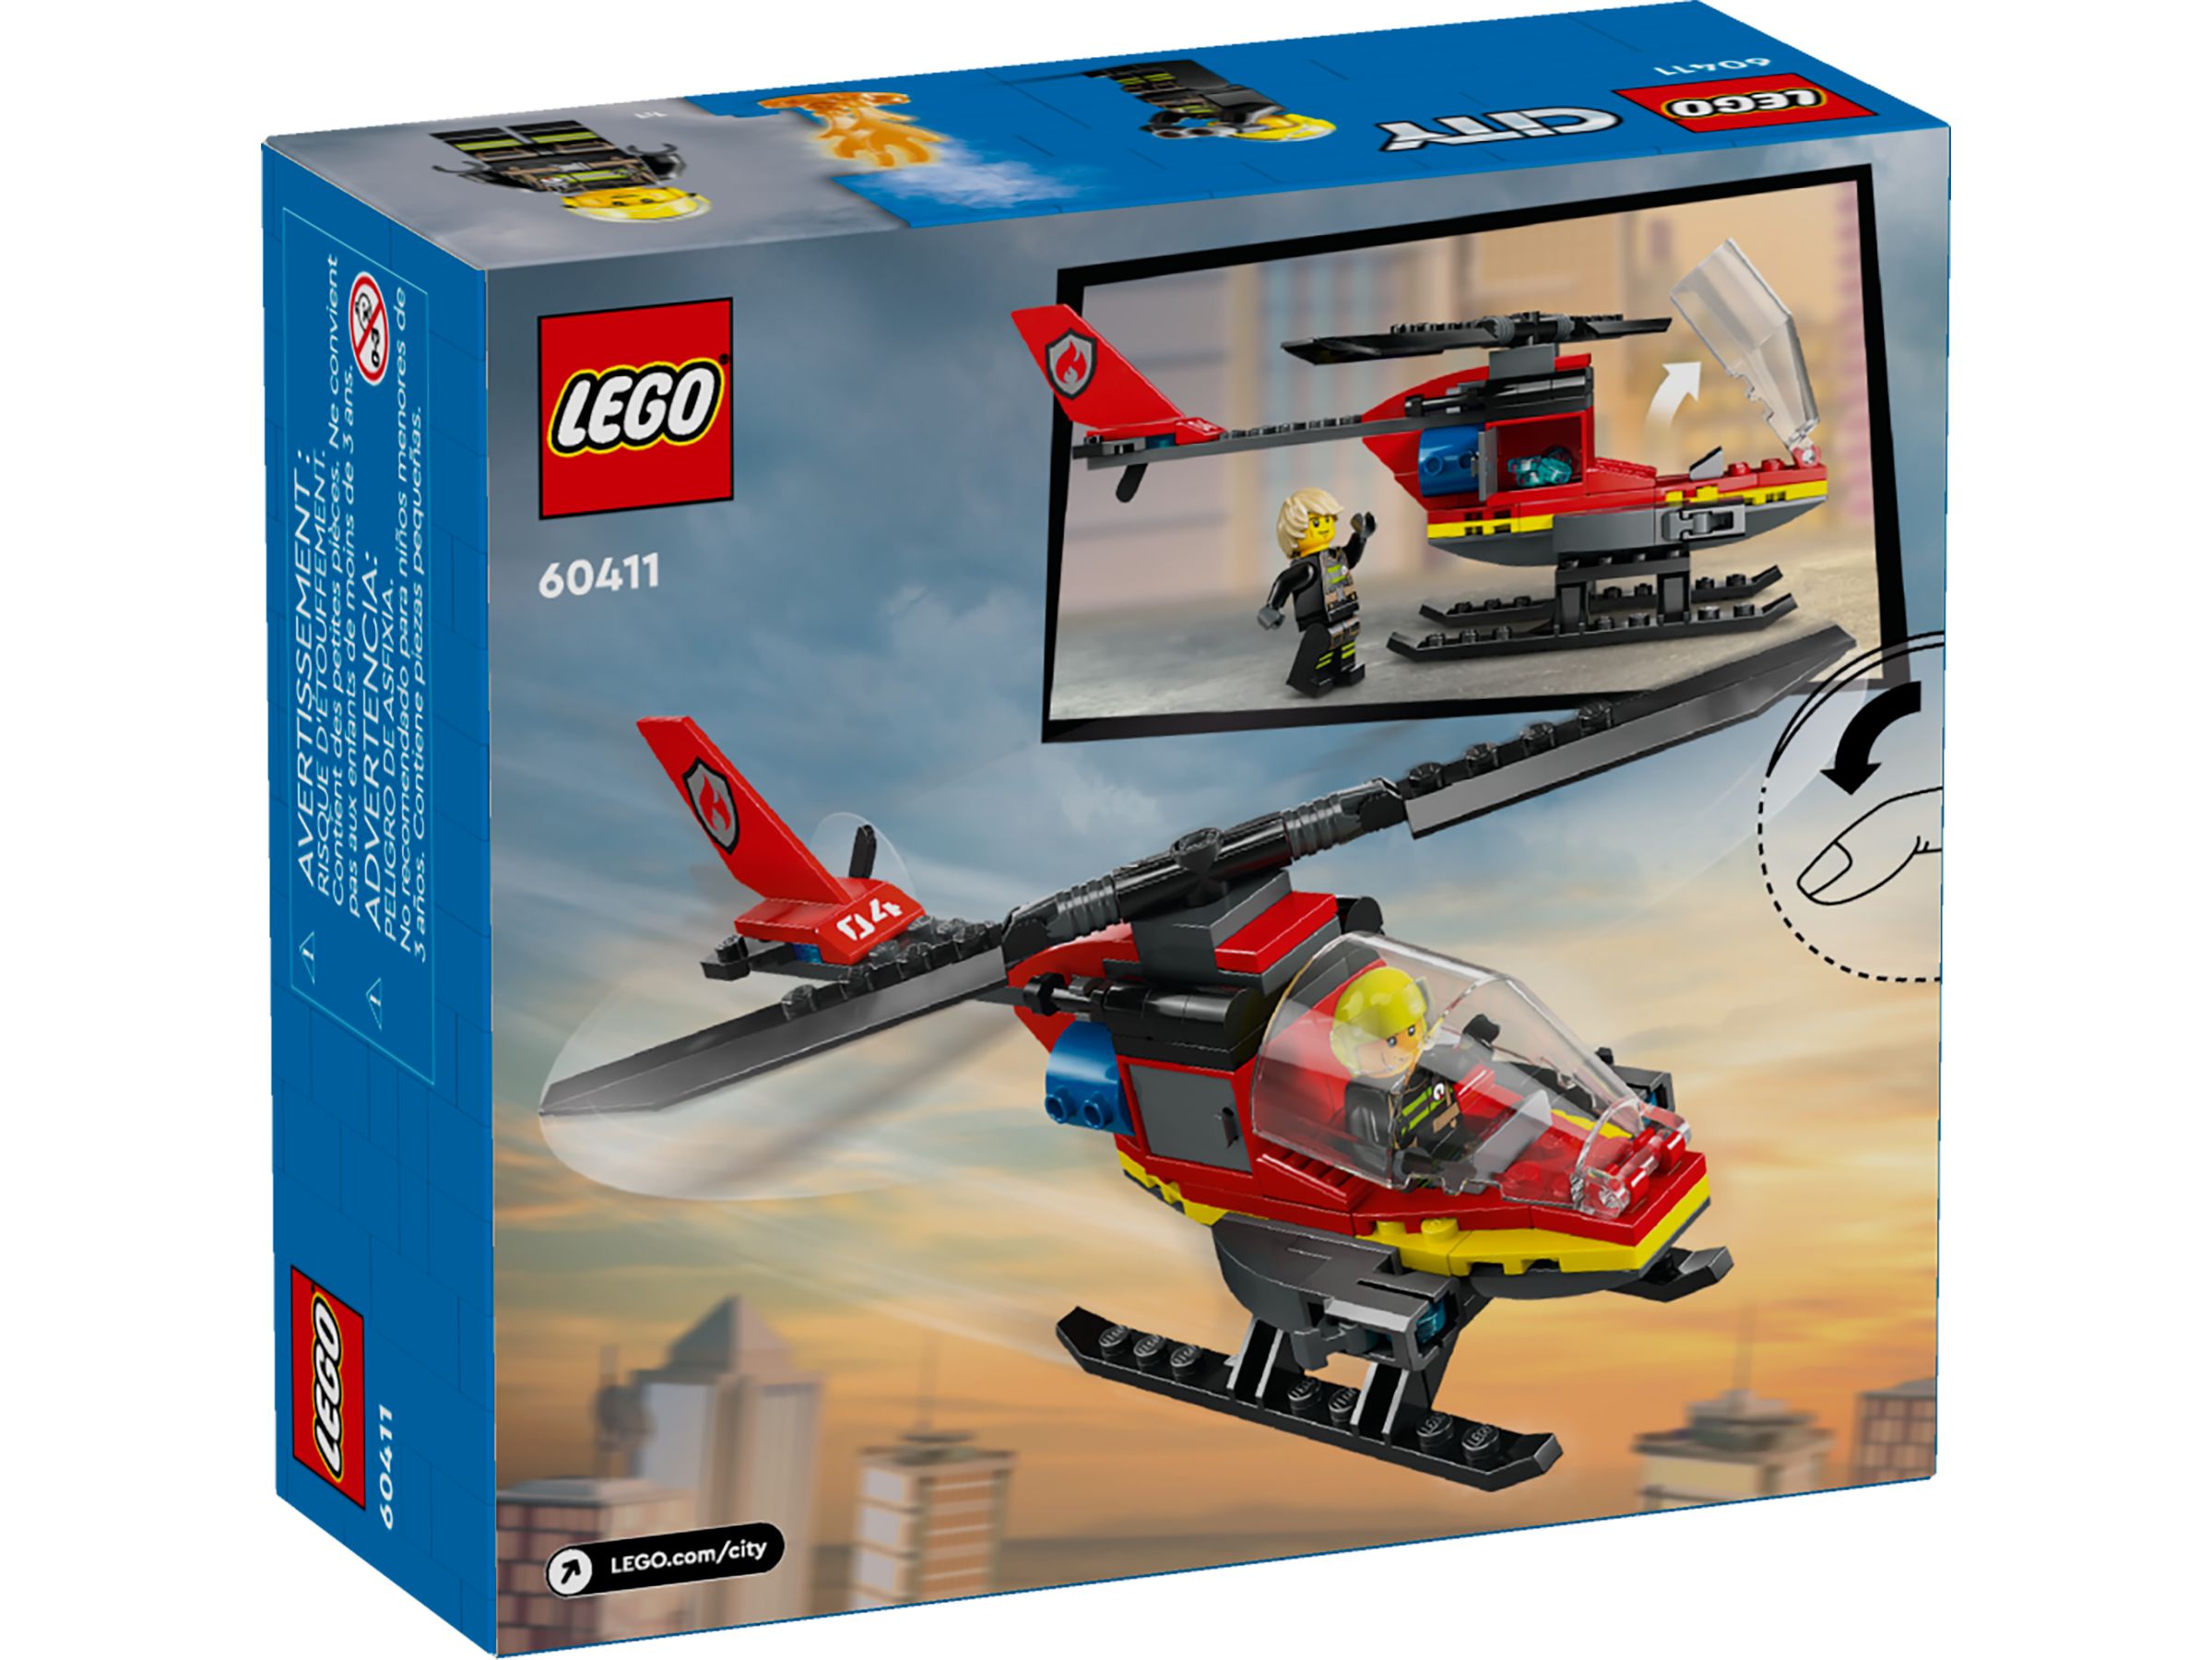 LEGO City 60411 Feuerwehrhubschrauber LEGO_60411_Box5_v39.jpg